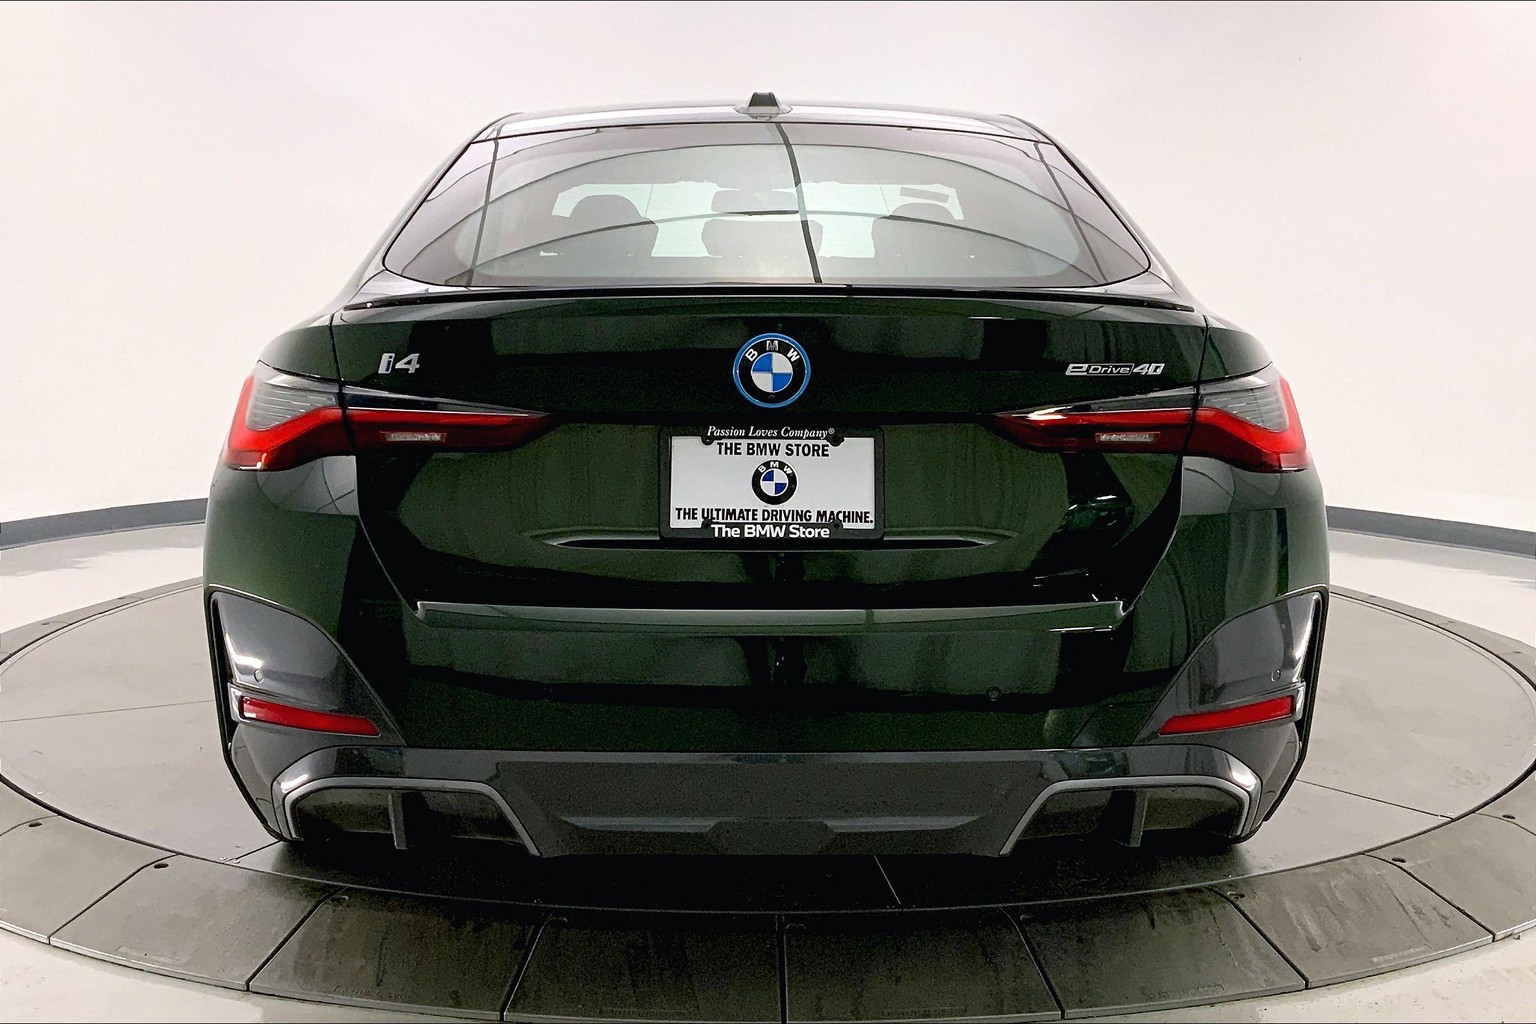 THE BMW STORE - 20 Photos & 33 Reviews - 6131 Stewart Rd, Cincinnati, Ohio  - Auto Repair - Phone Number - Yelp